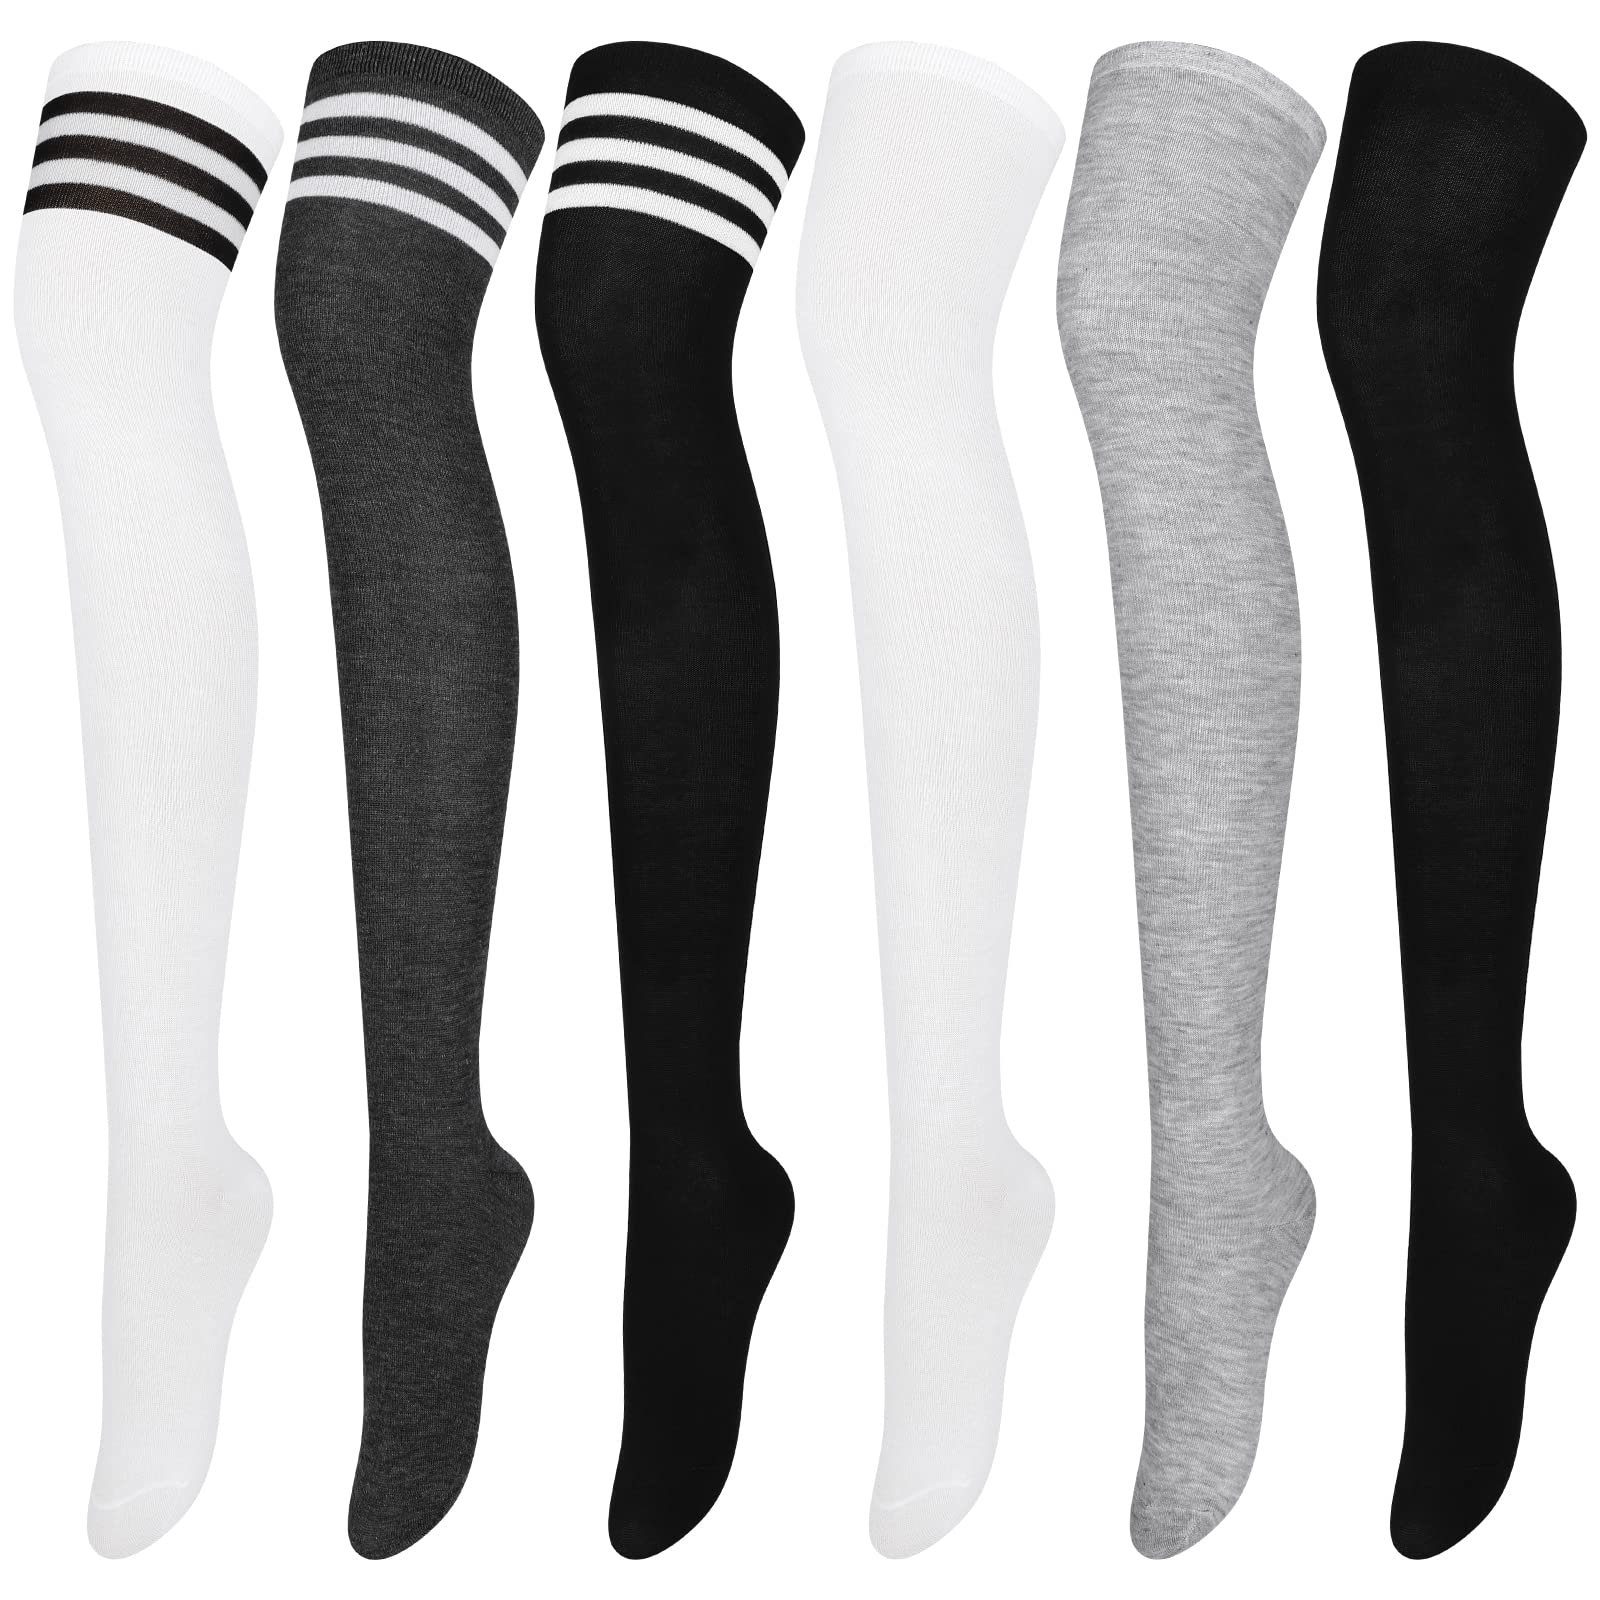 POCHUMIDUU Langsocken 6 Paar Overknee-Oberschenkel-Socken, kniehoch, warme  Strümpfe, (6-Paar) hohe Stiefel, Oberschenkel, Damensocken